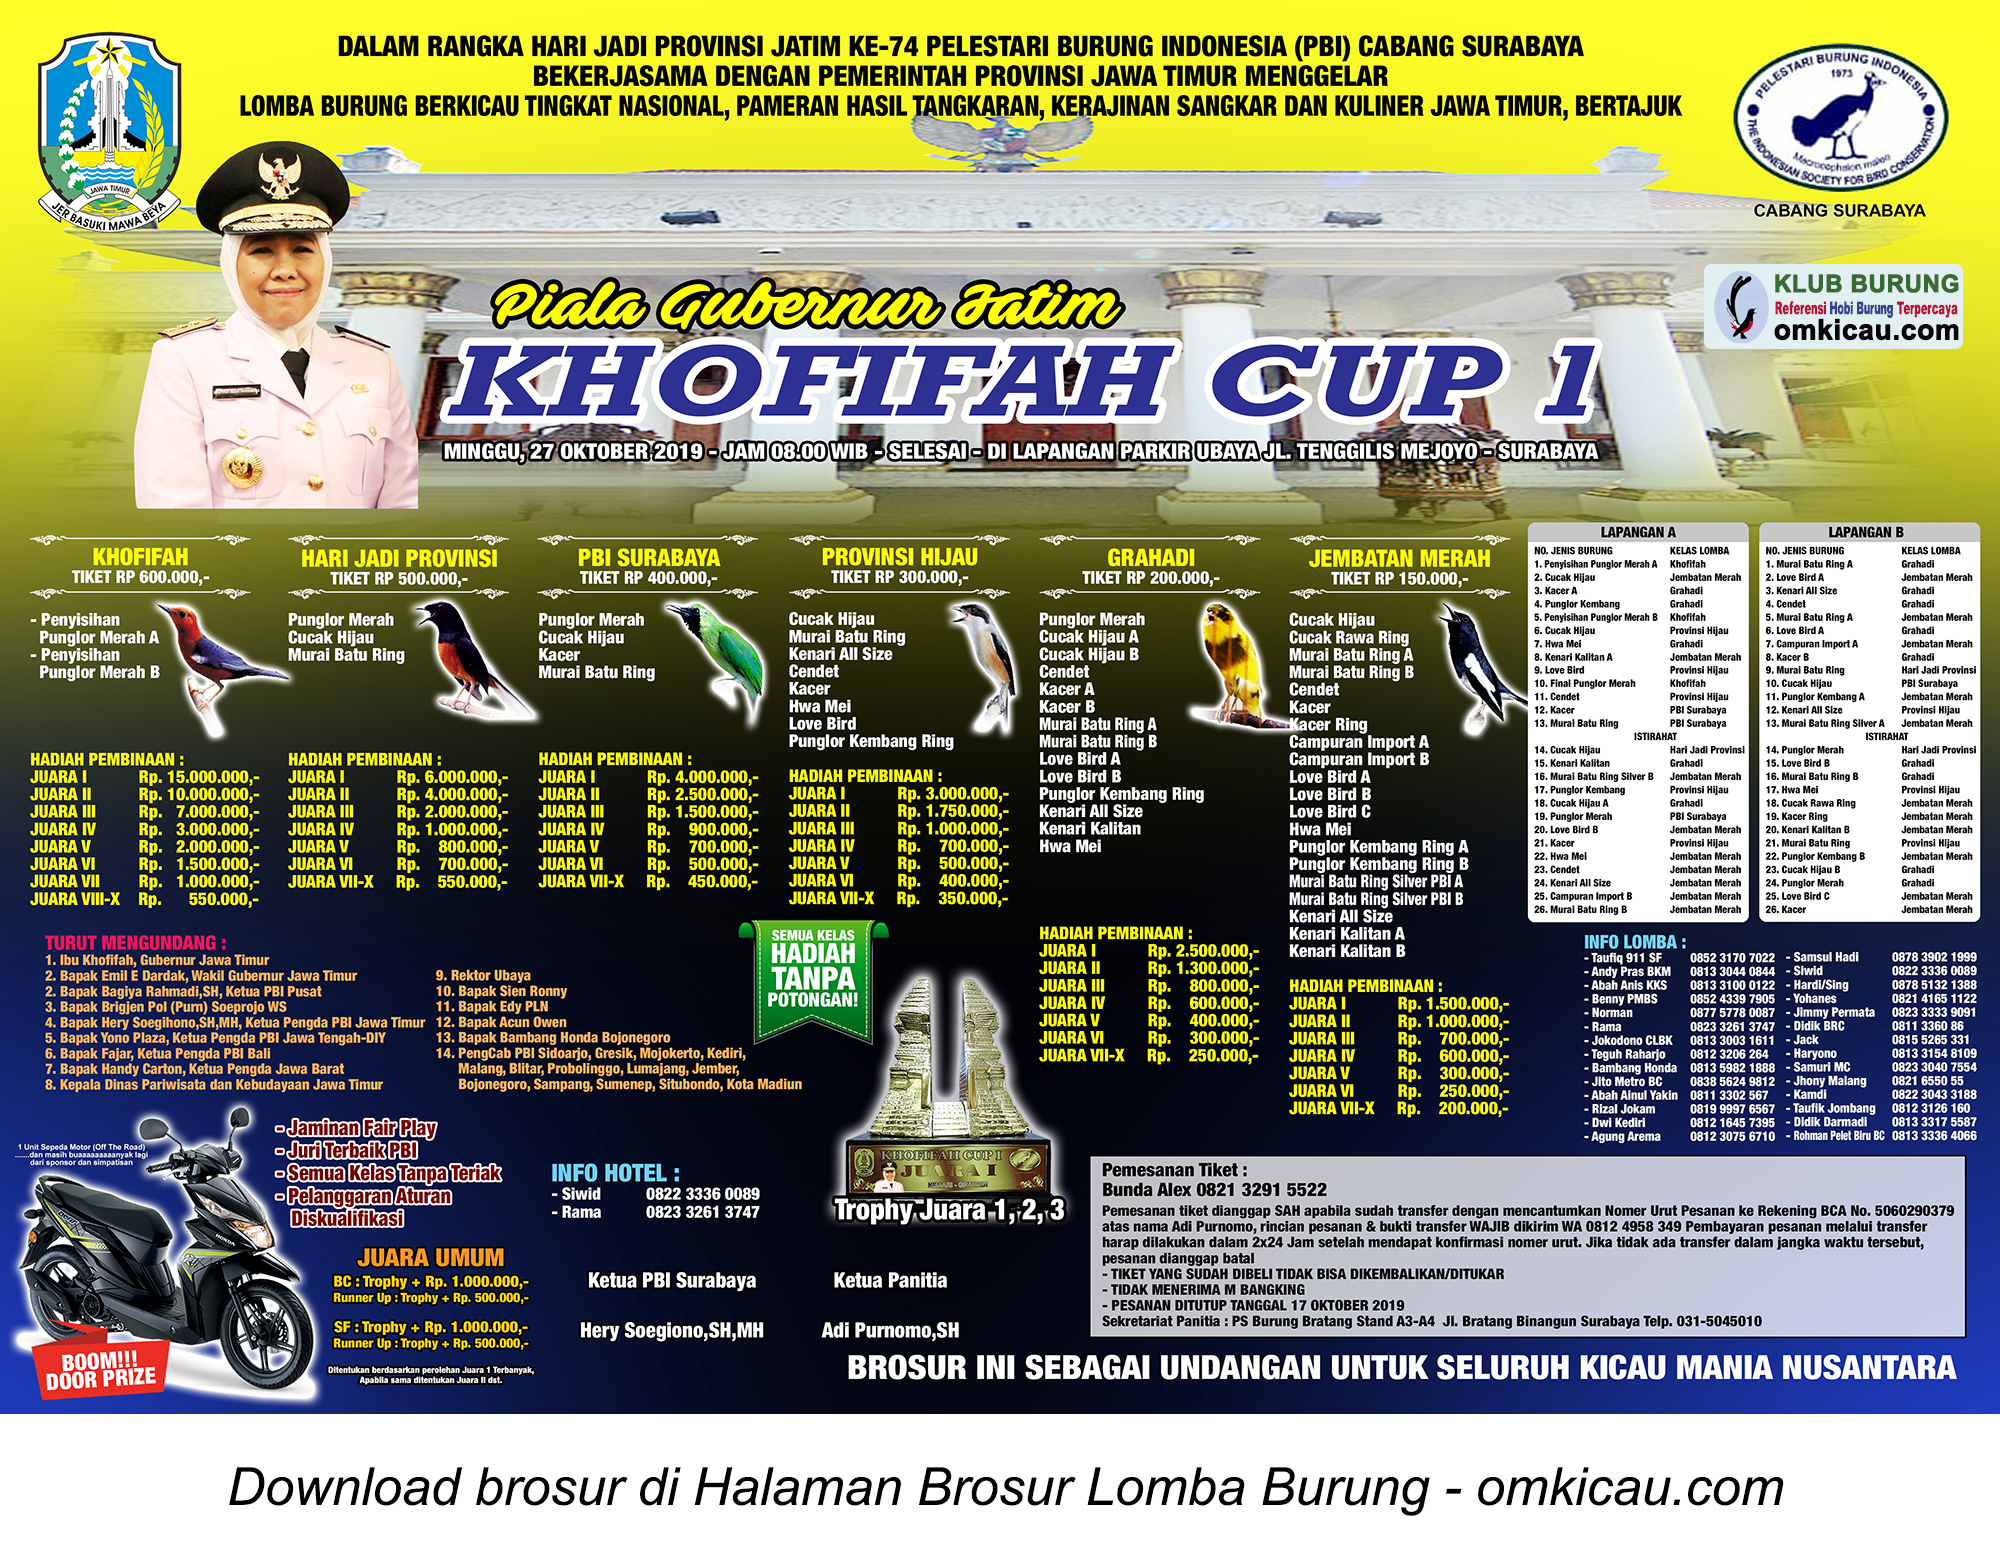 Khofifah Cup 1